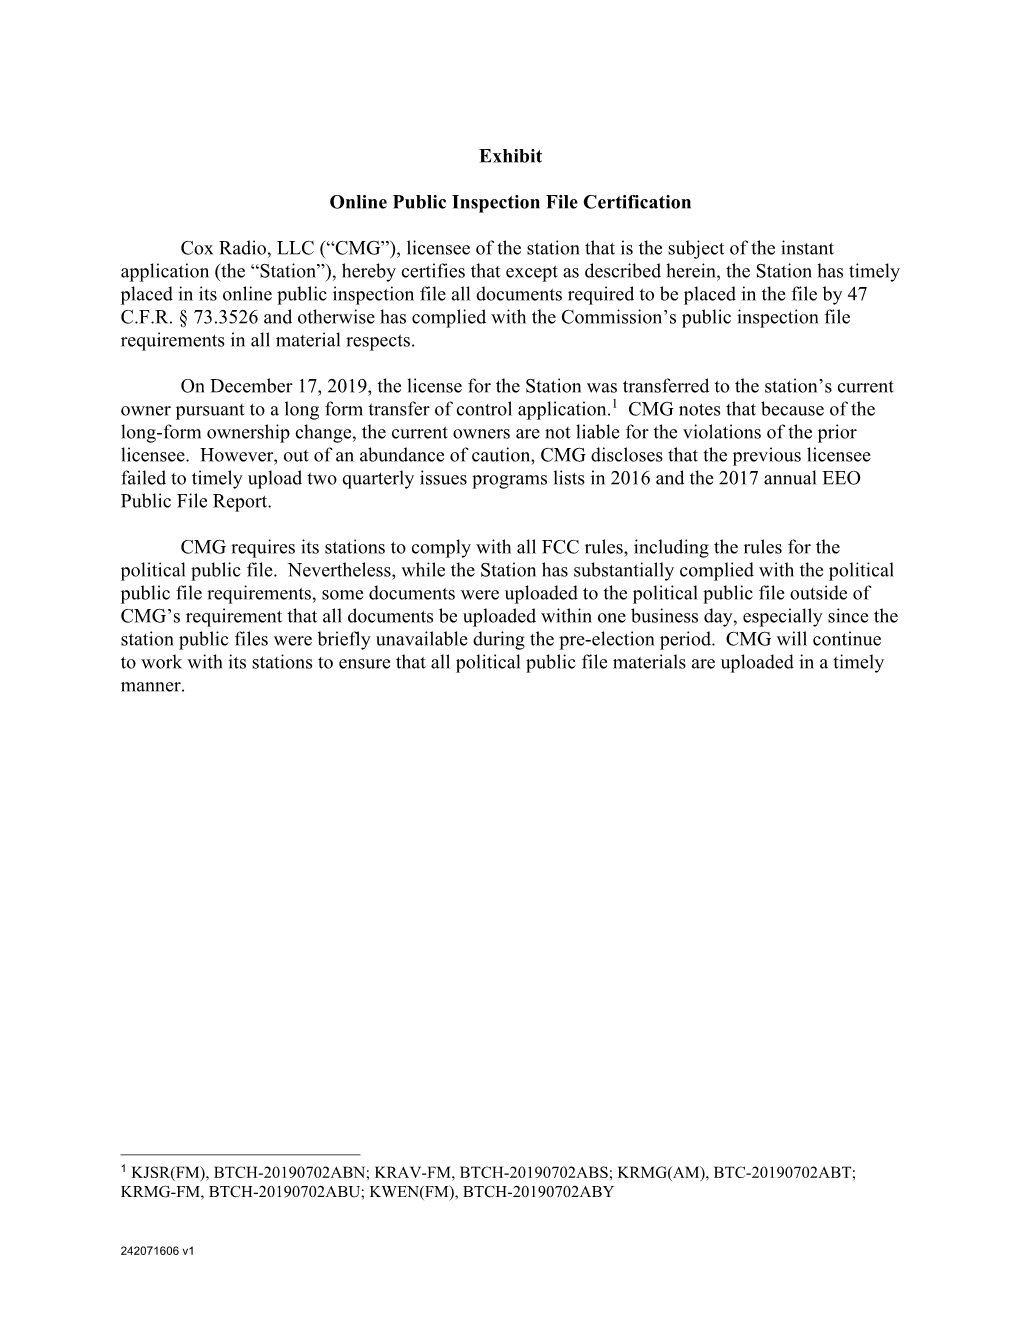 Exhibit Online Public Inspection File Certification Cox Radio, LLC